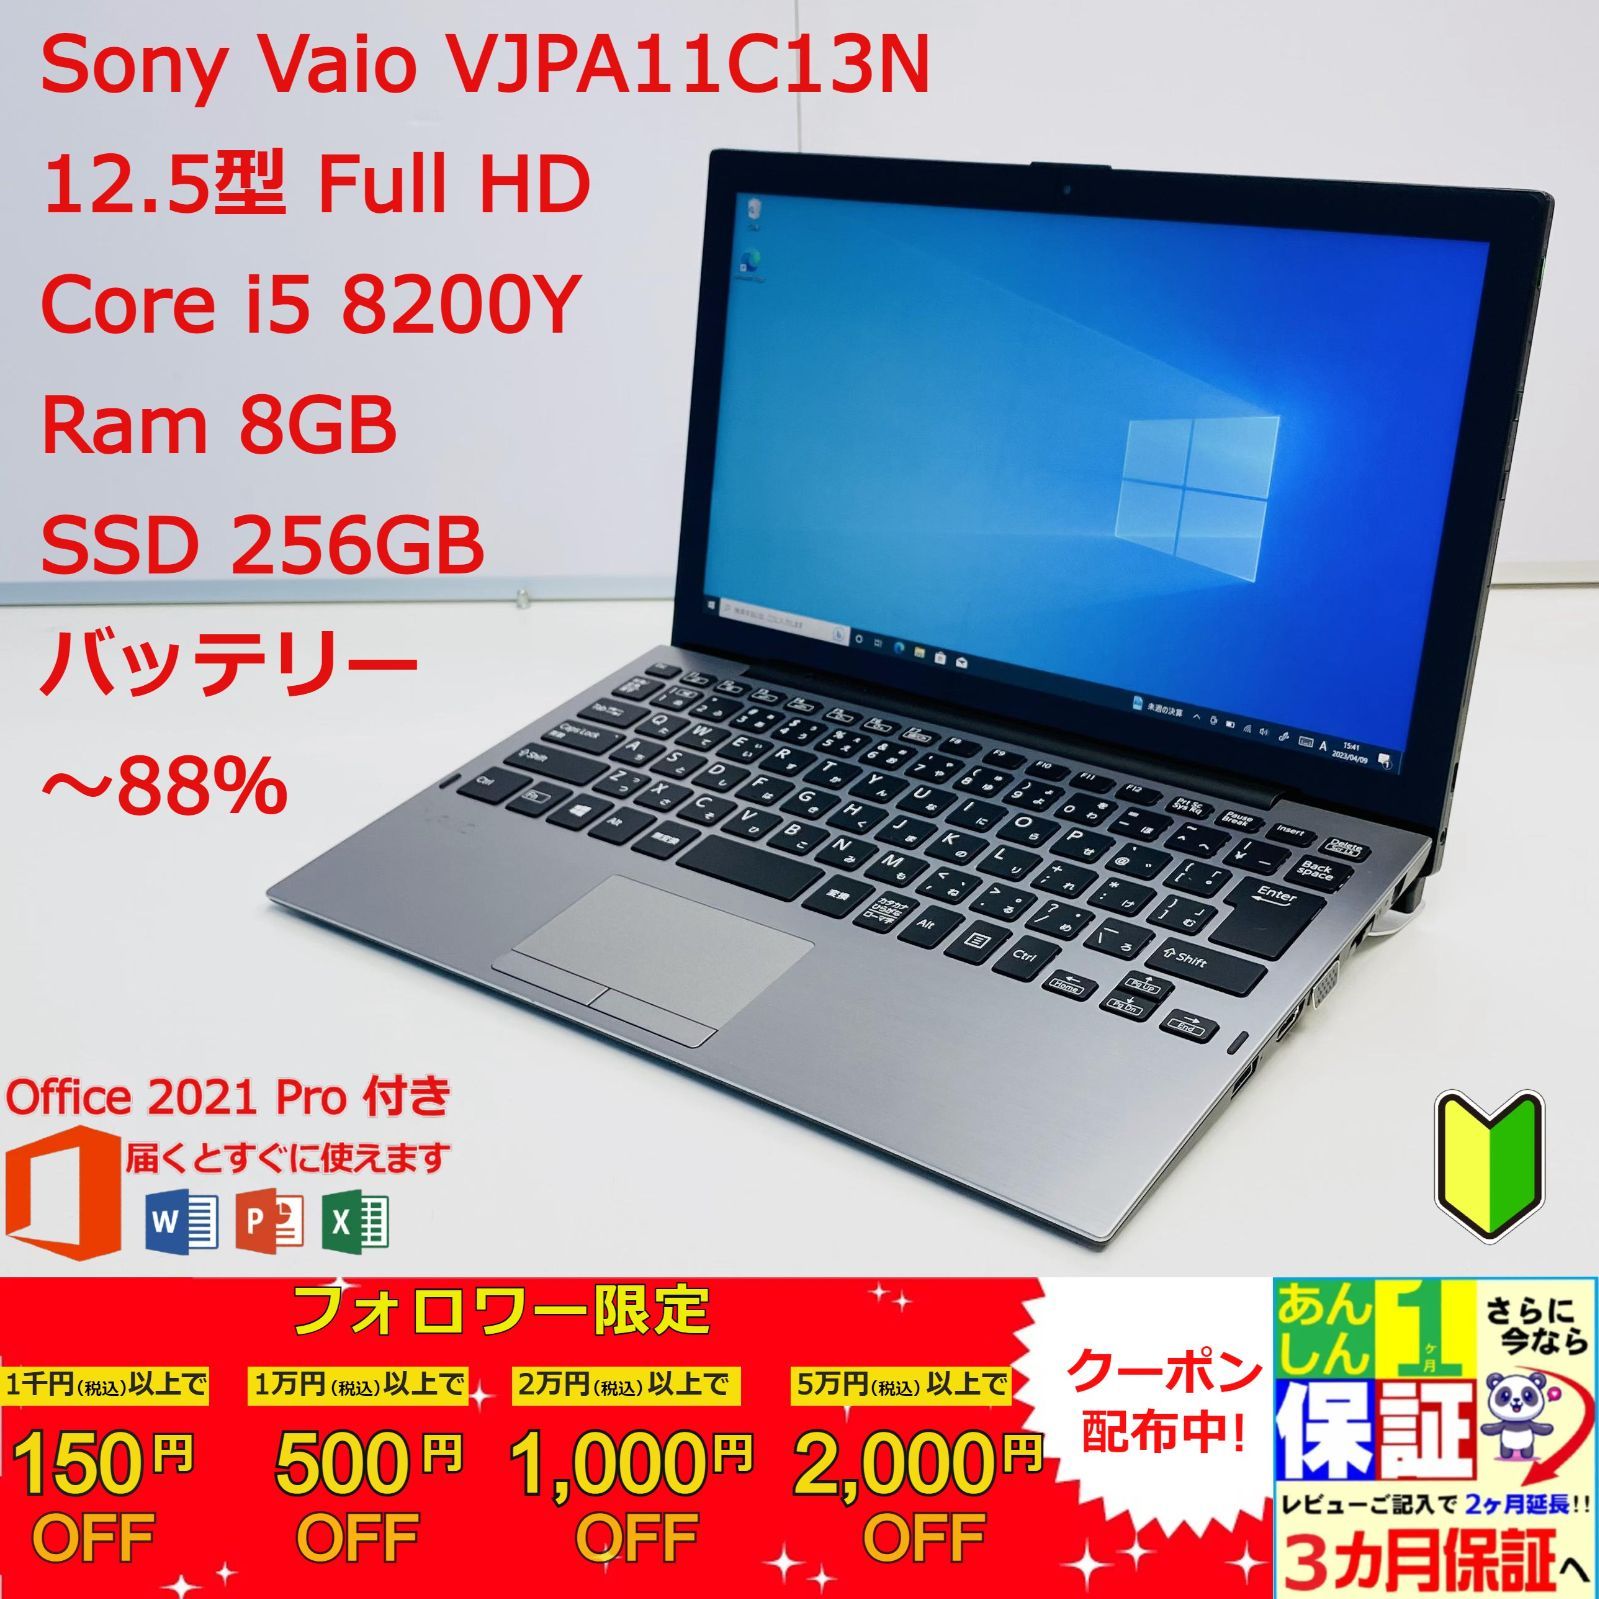 Sony Vaio Pro VJPA11C13N タッチパネル 12.5型 Core i5-8200Y/Ram 8GB